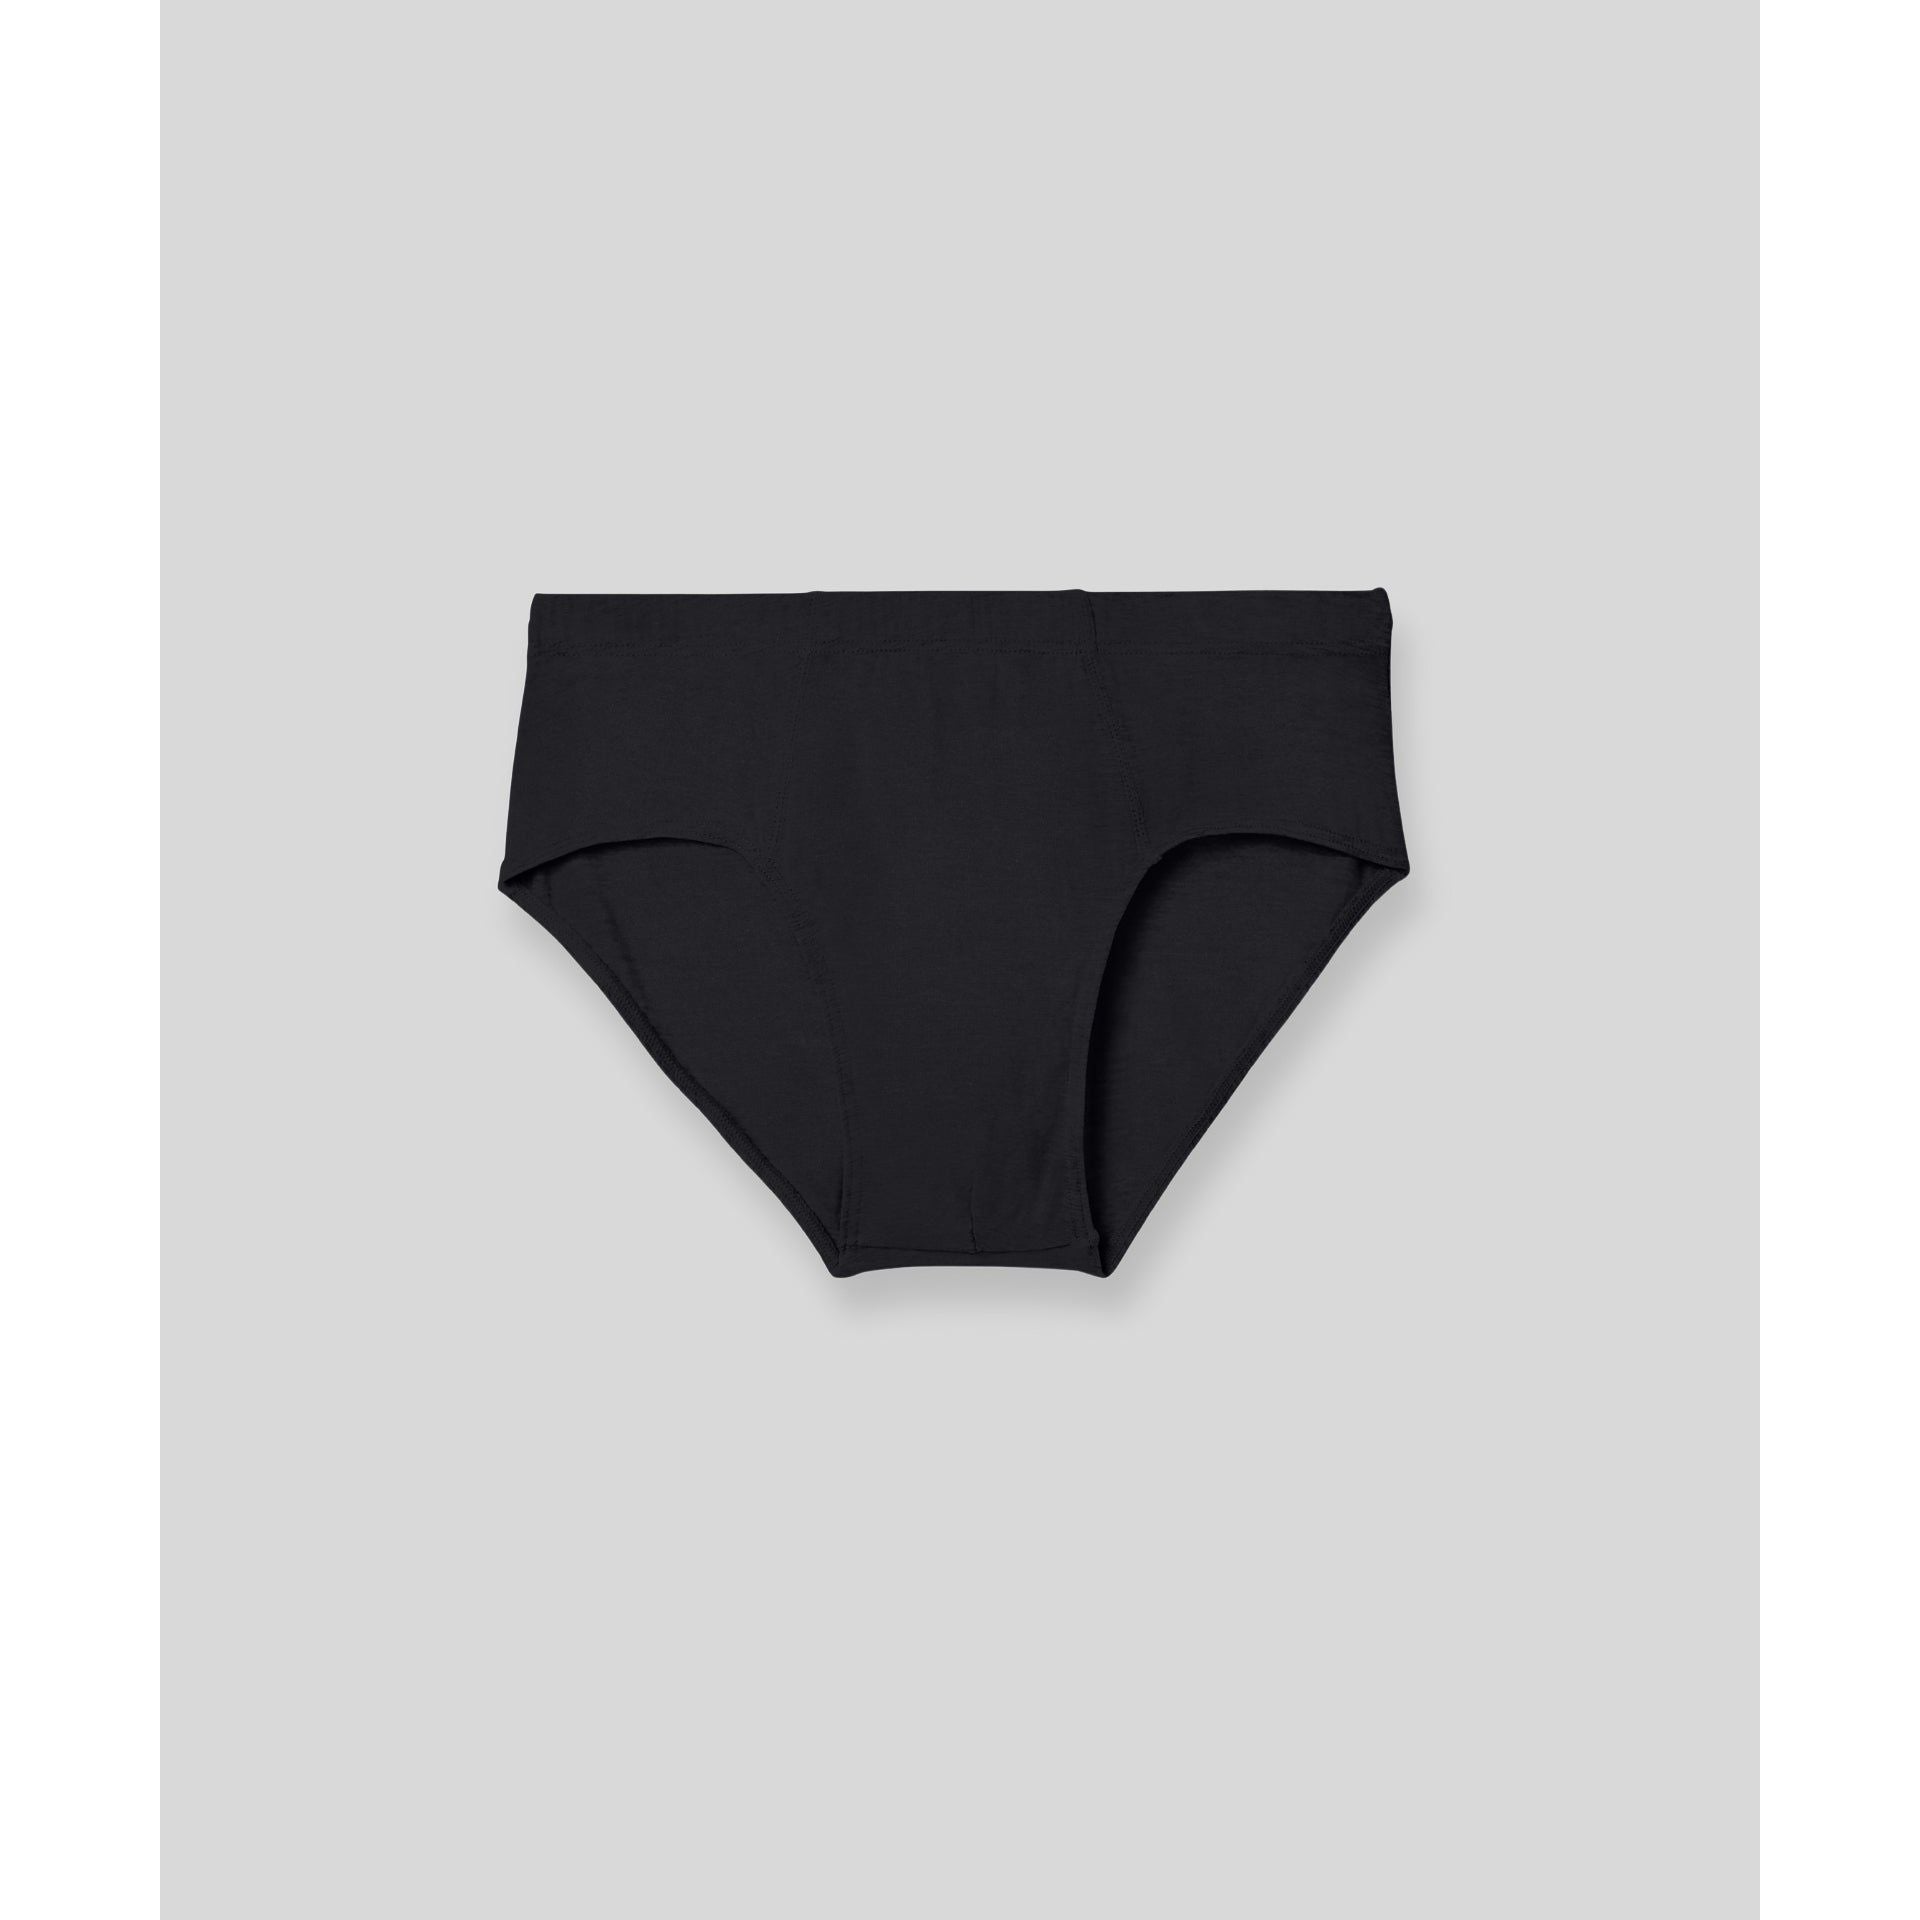 Black Micro Modal Underwear for Men